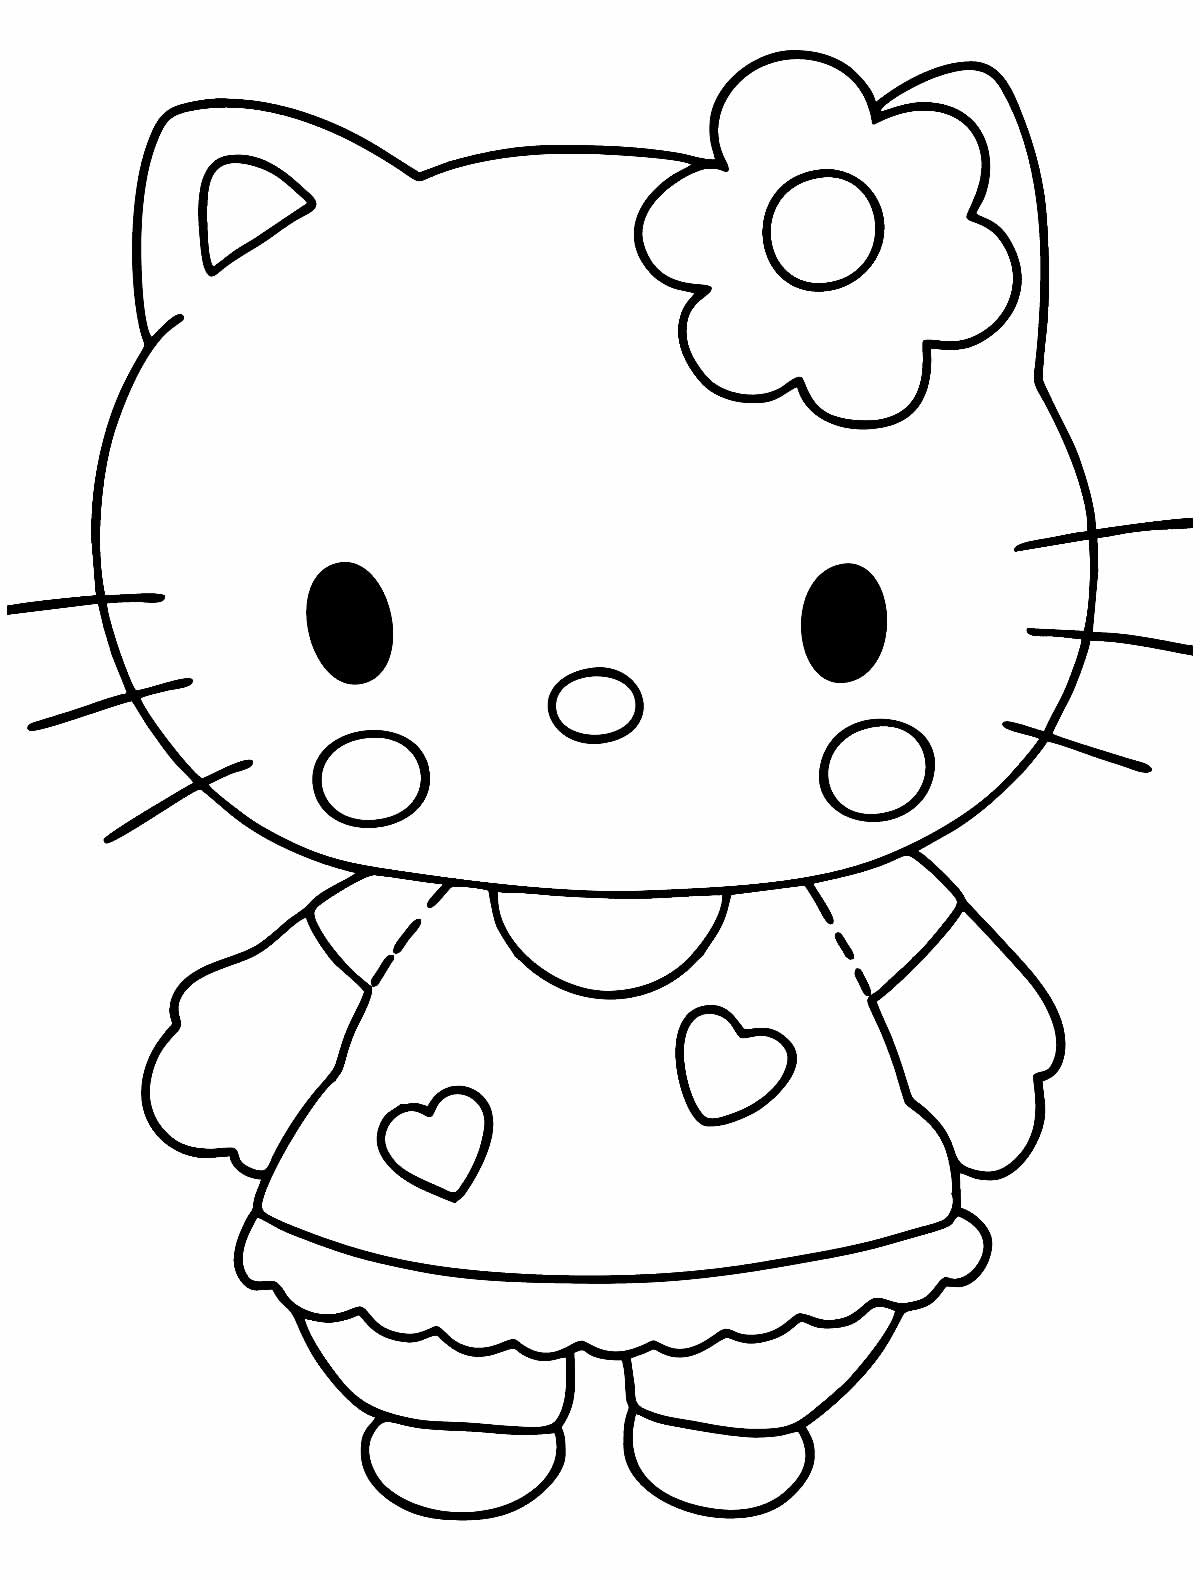 40 Desenhos da Hello Kitty para Colorir e Imprimir - Online Cursos  Gratuitos